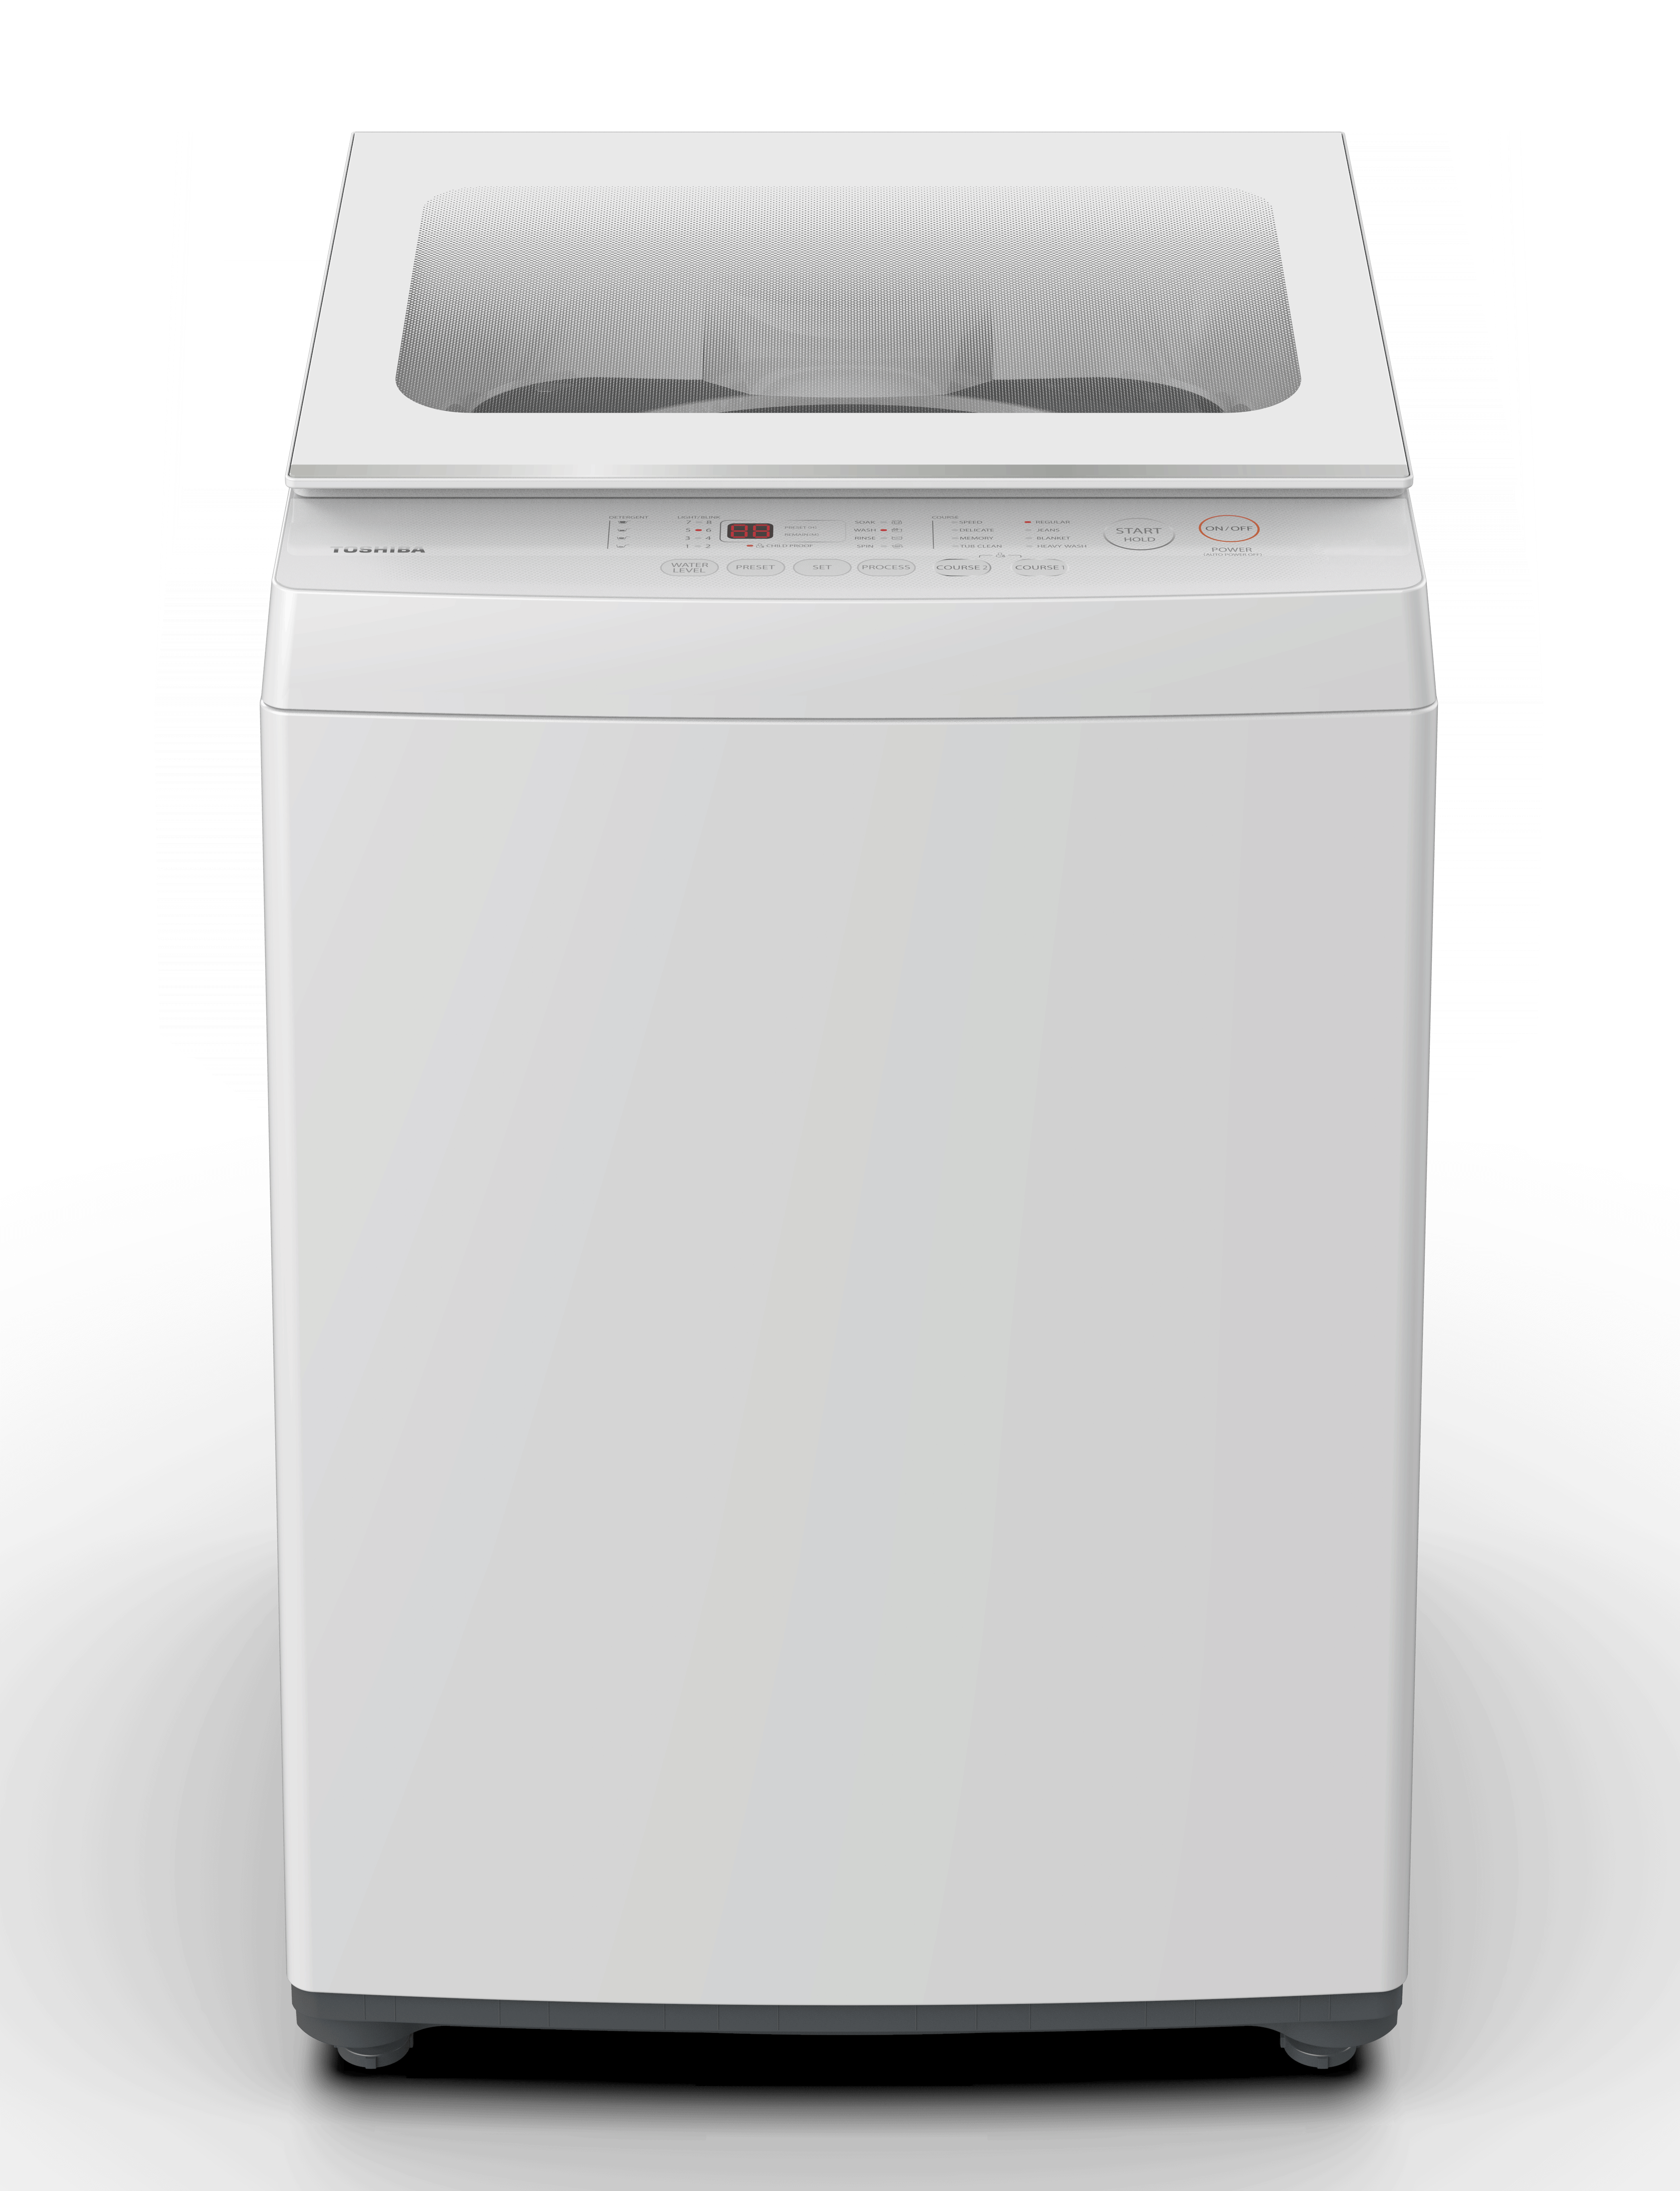 Toshiba Top Load Washing Machine | Details Matter